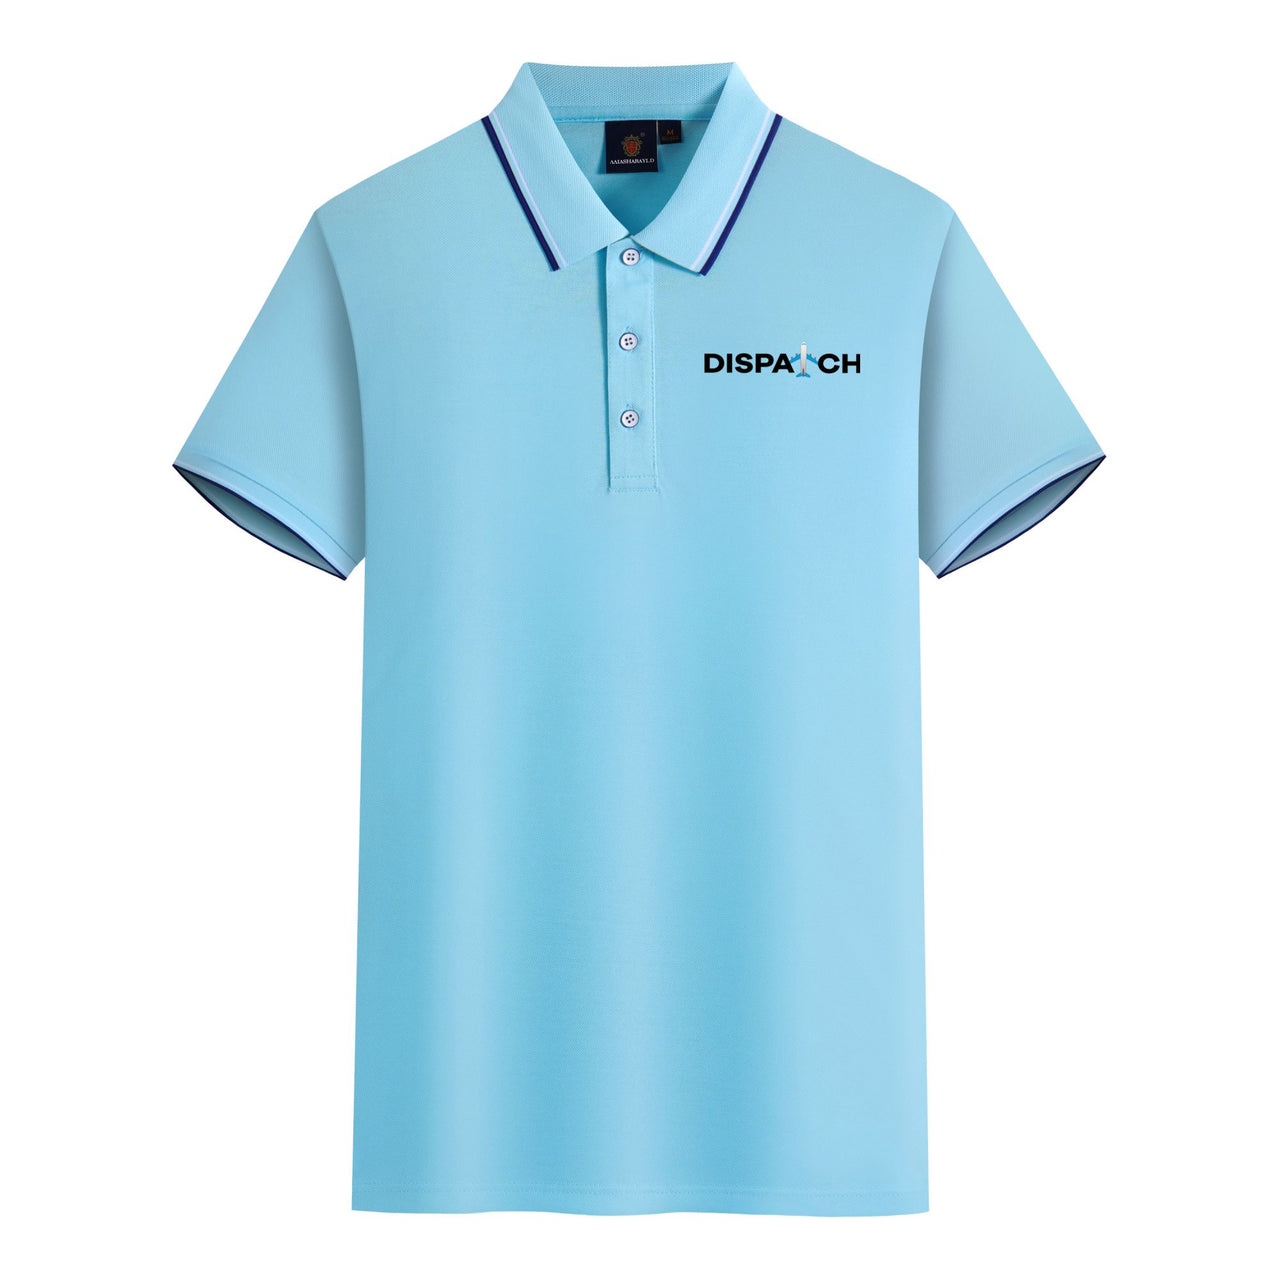 Dispatch Designed Stylish Polo T-Shirts